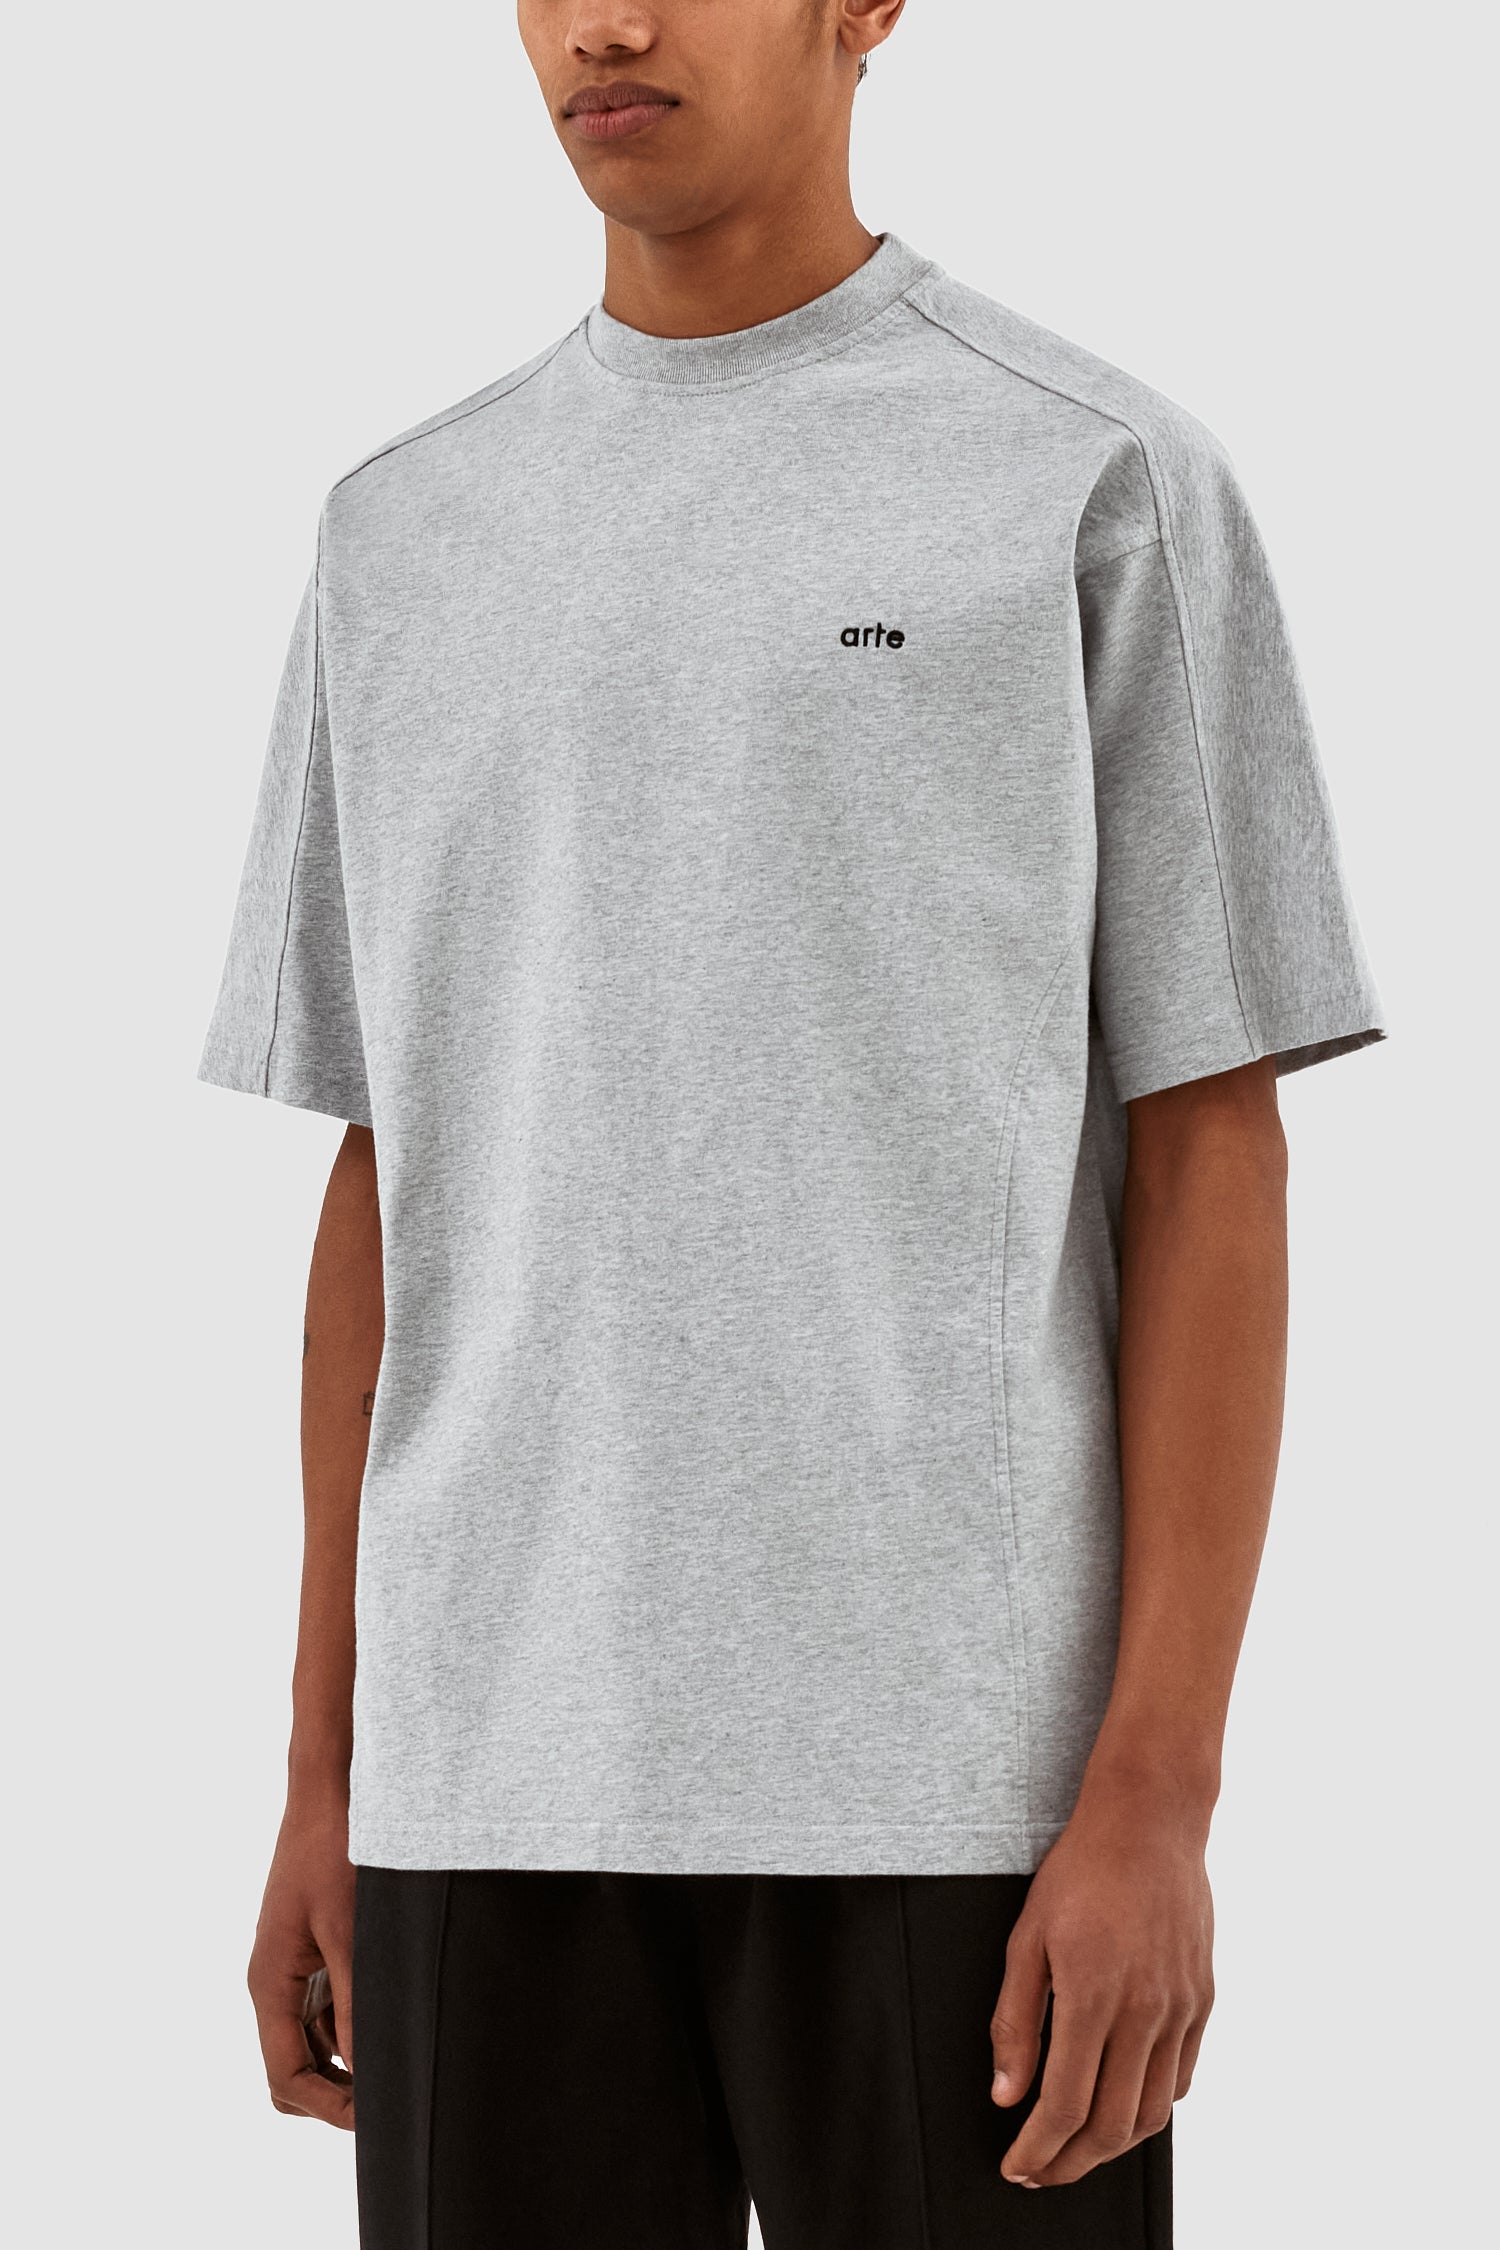 Theo S Cuts T-shirt - Grey